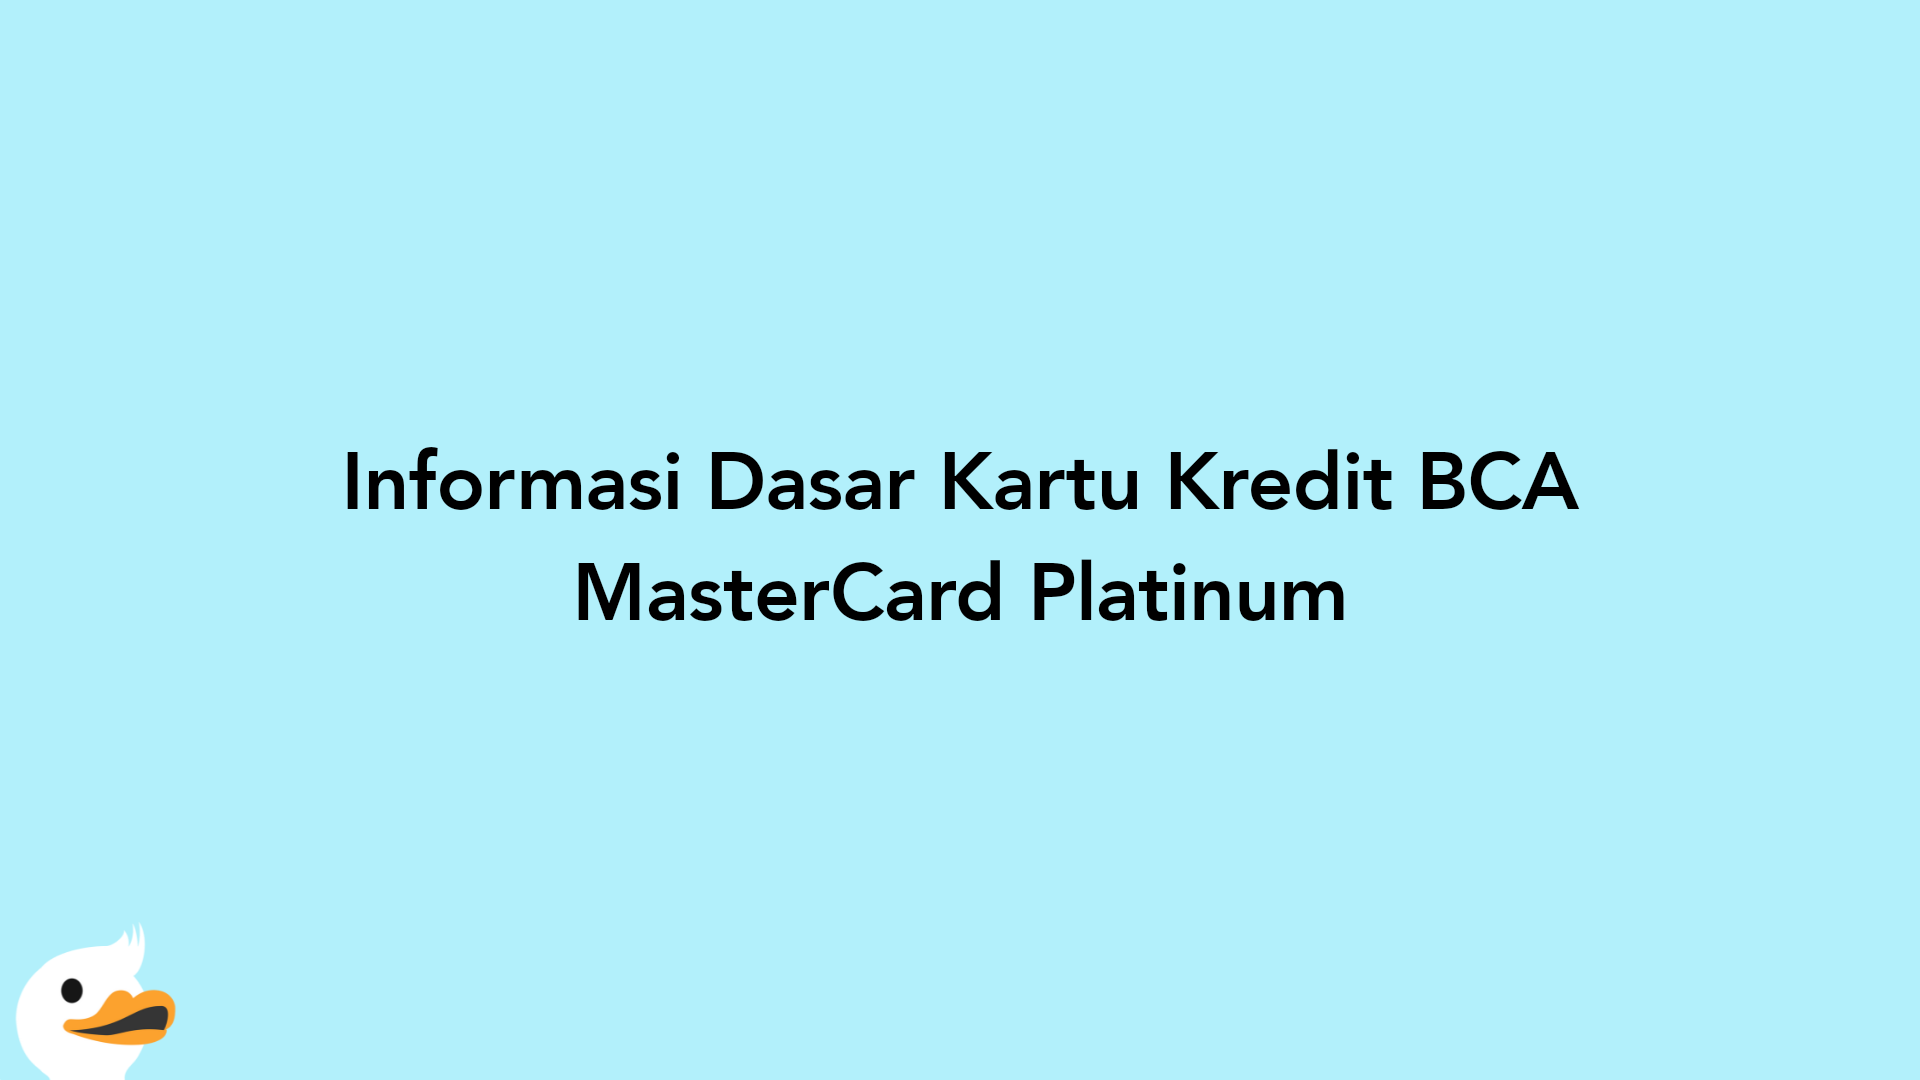 Informasi Dasar Kartu Kredit BCA MasterCard Platinum